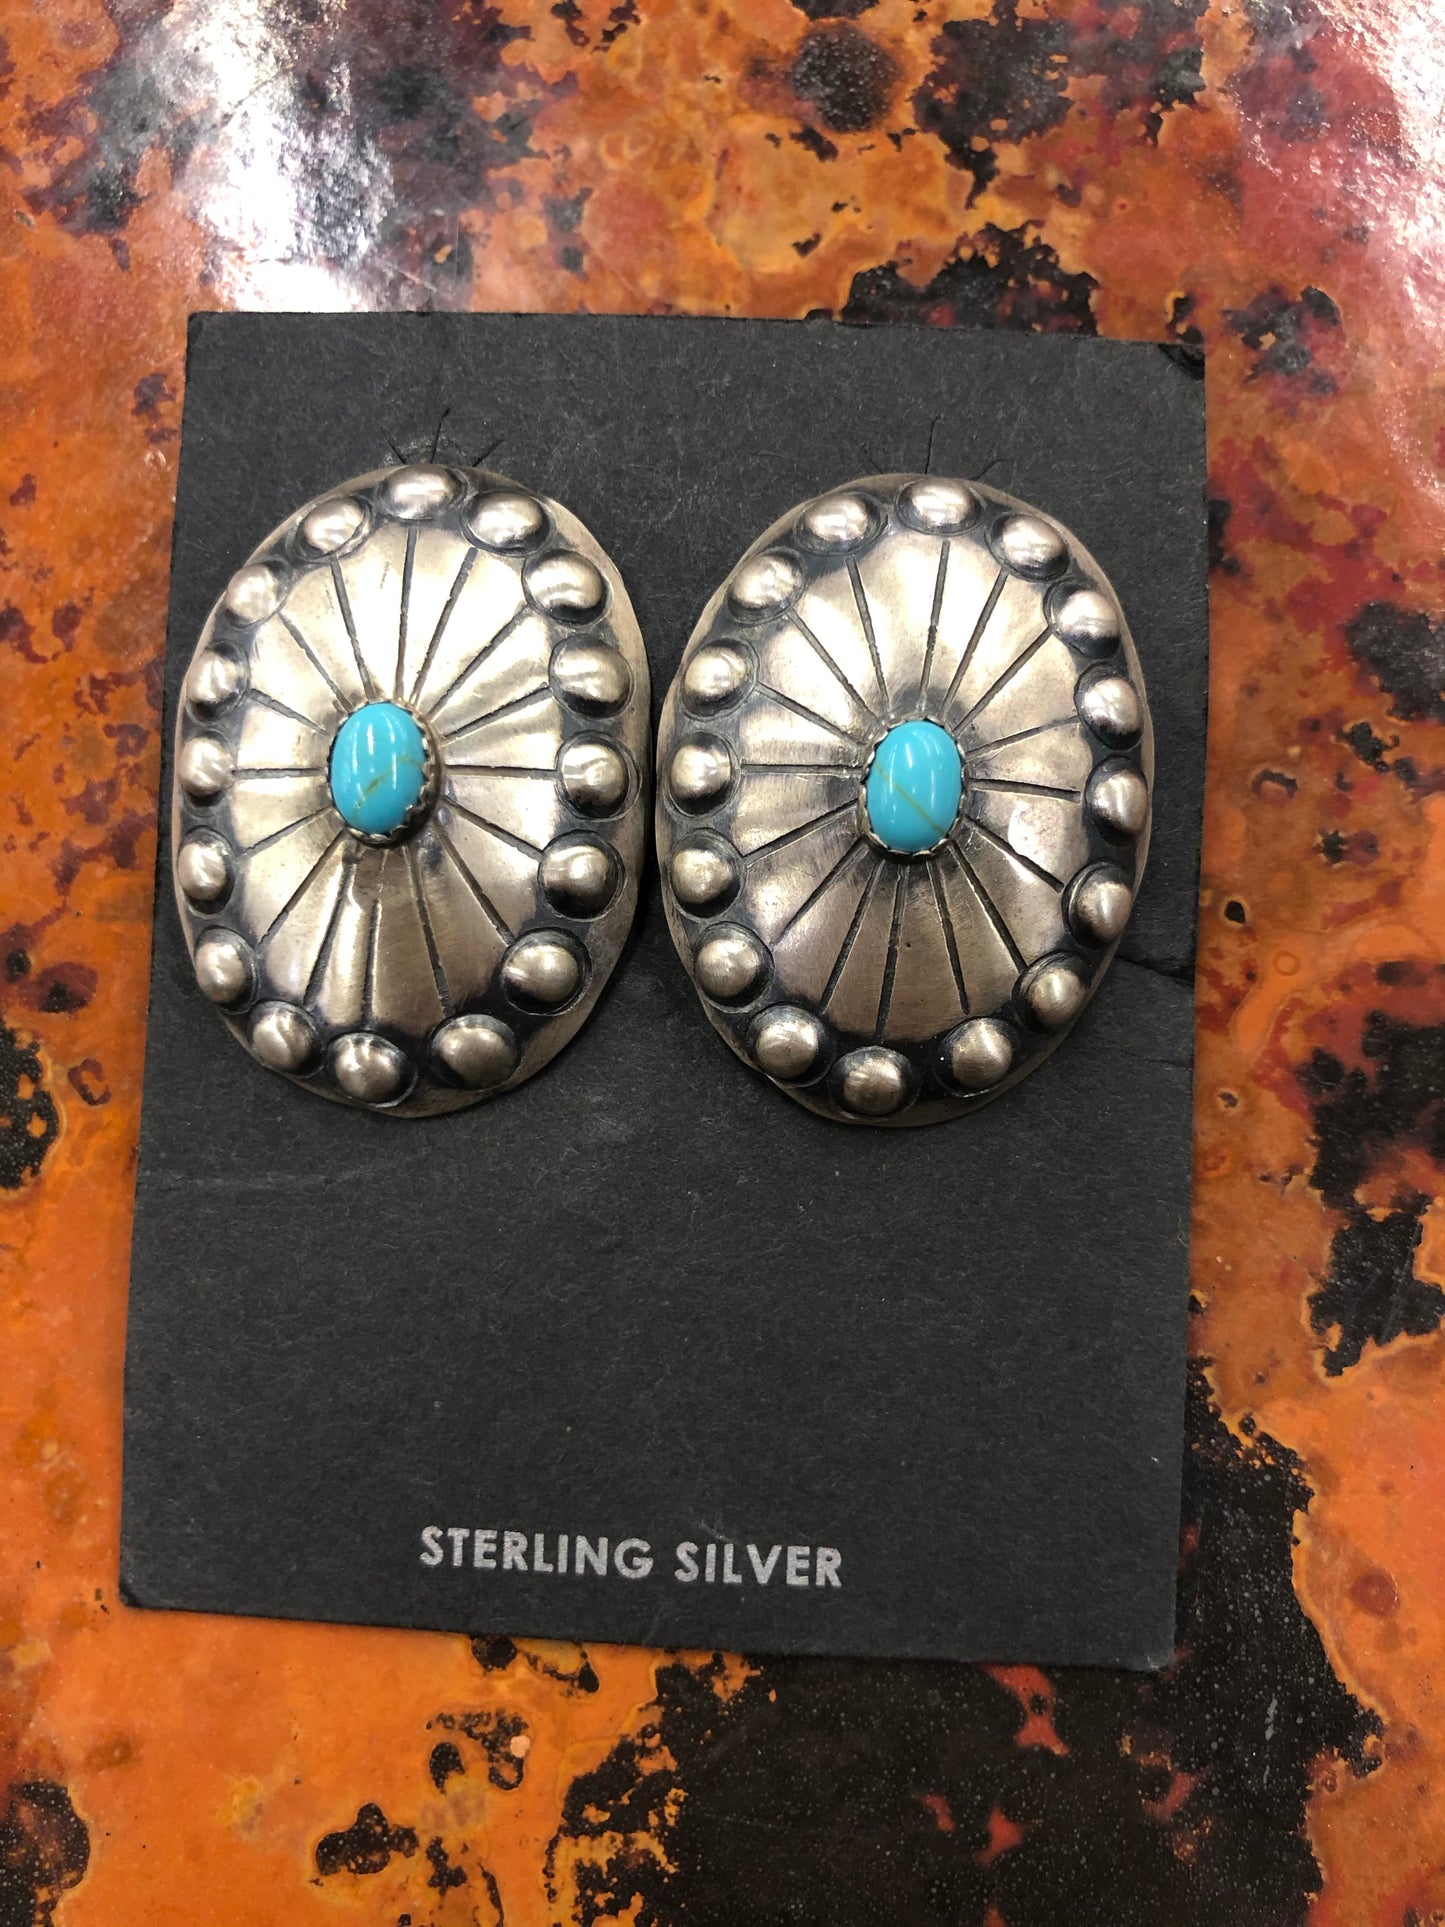 The Heathered Striking Silver Earrings